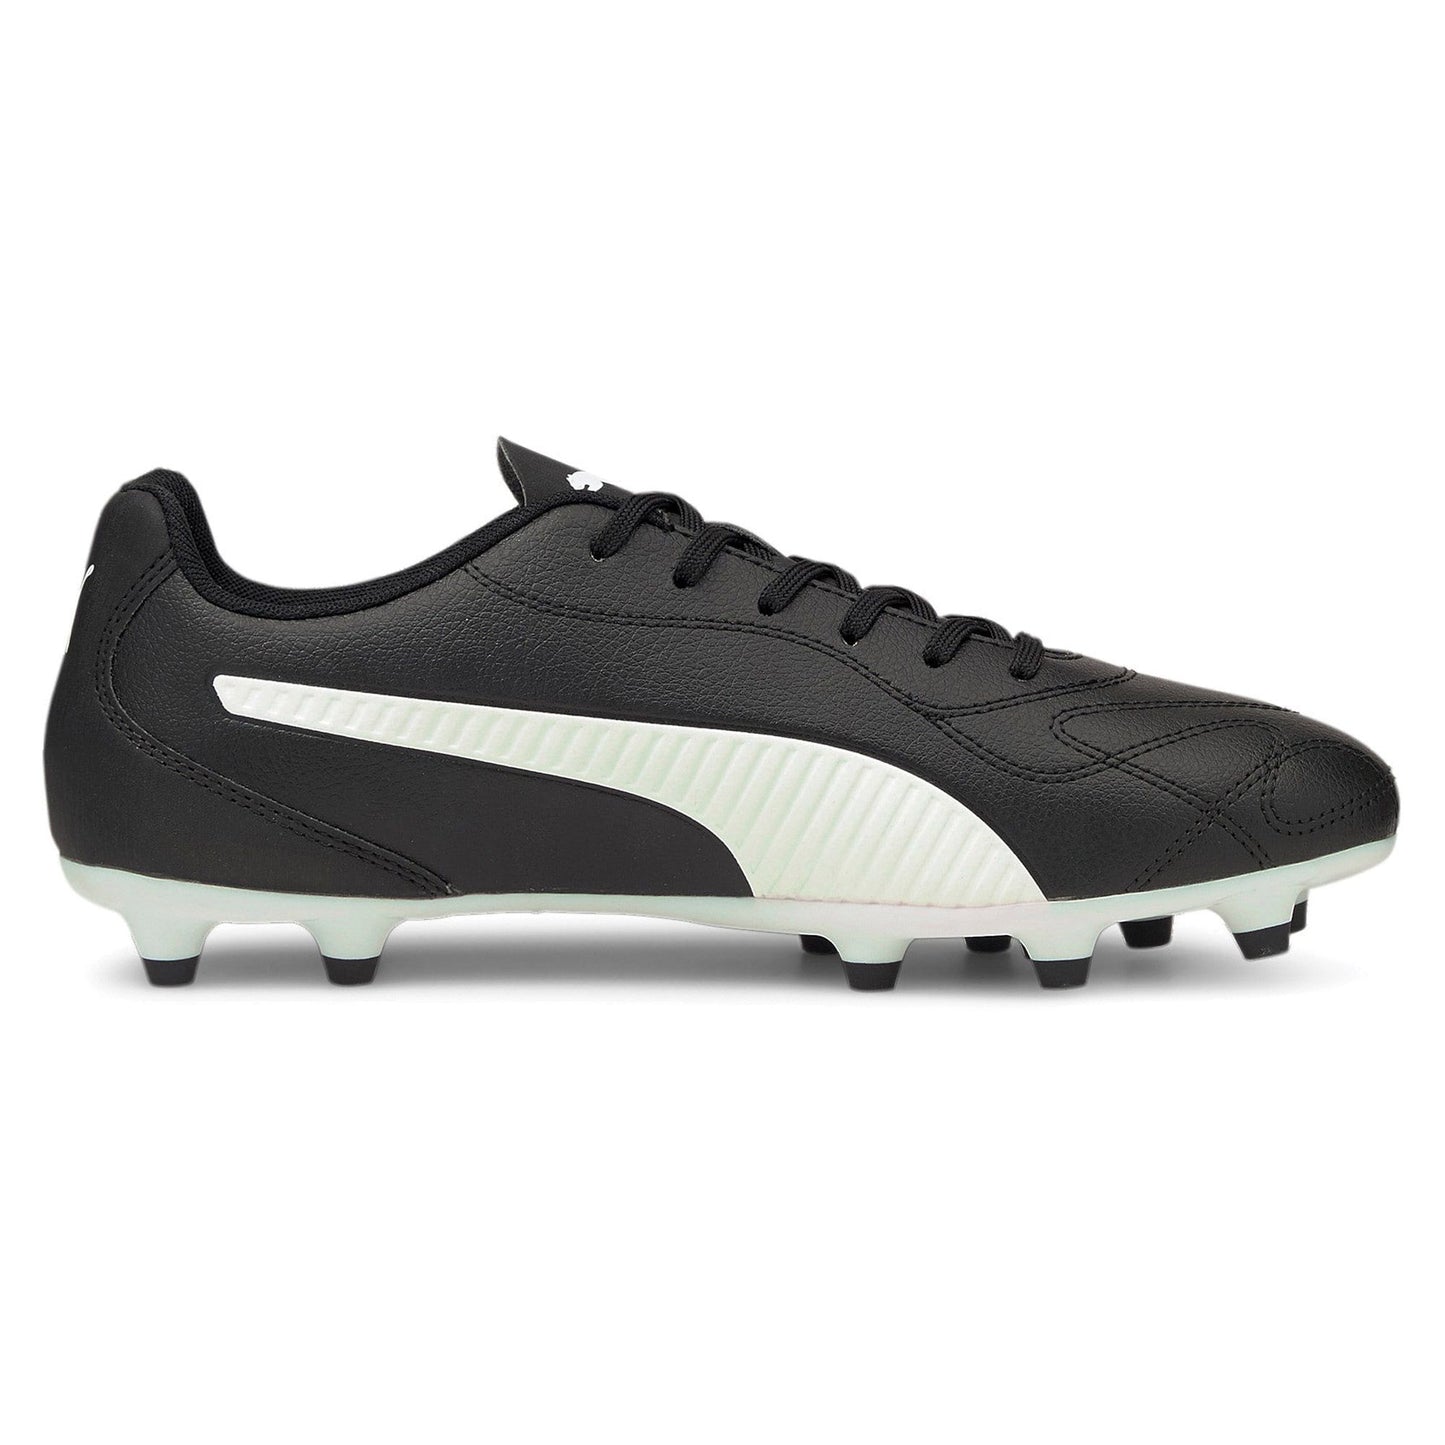 Puma Monarch II FG/AG Men's Football Boots Black/White - (106559 01) - PUY - R2L17